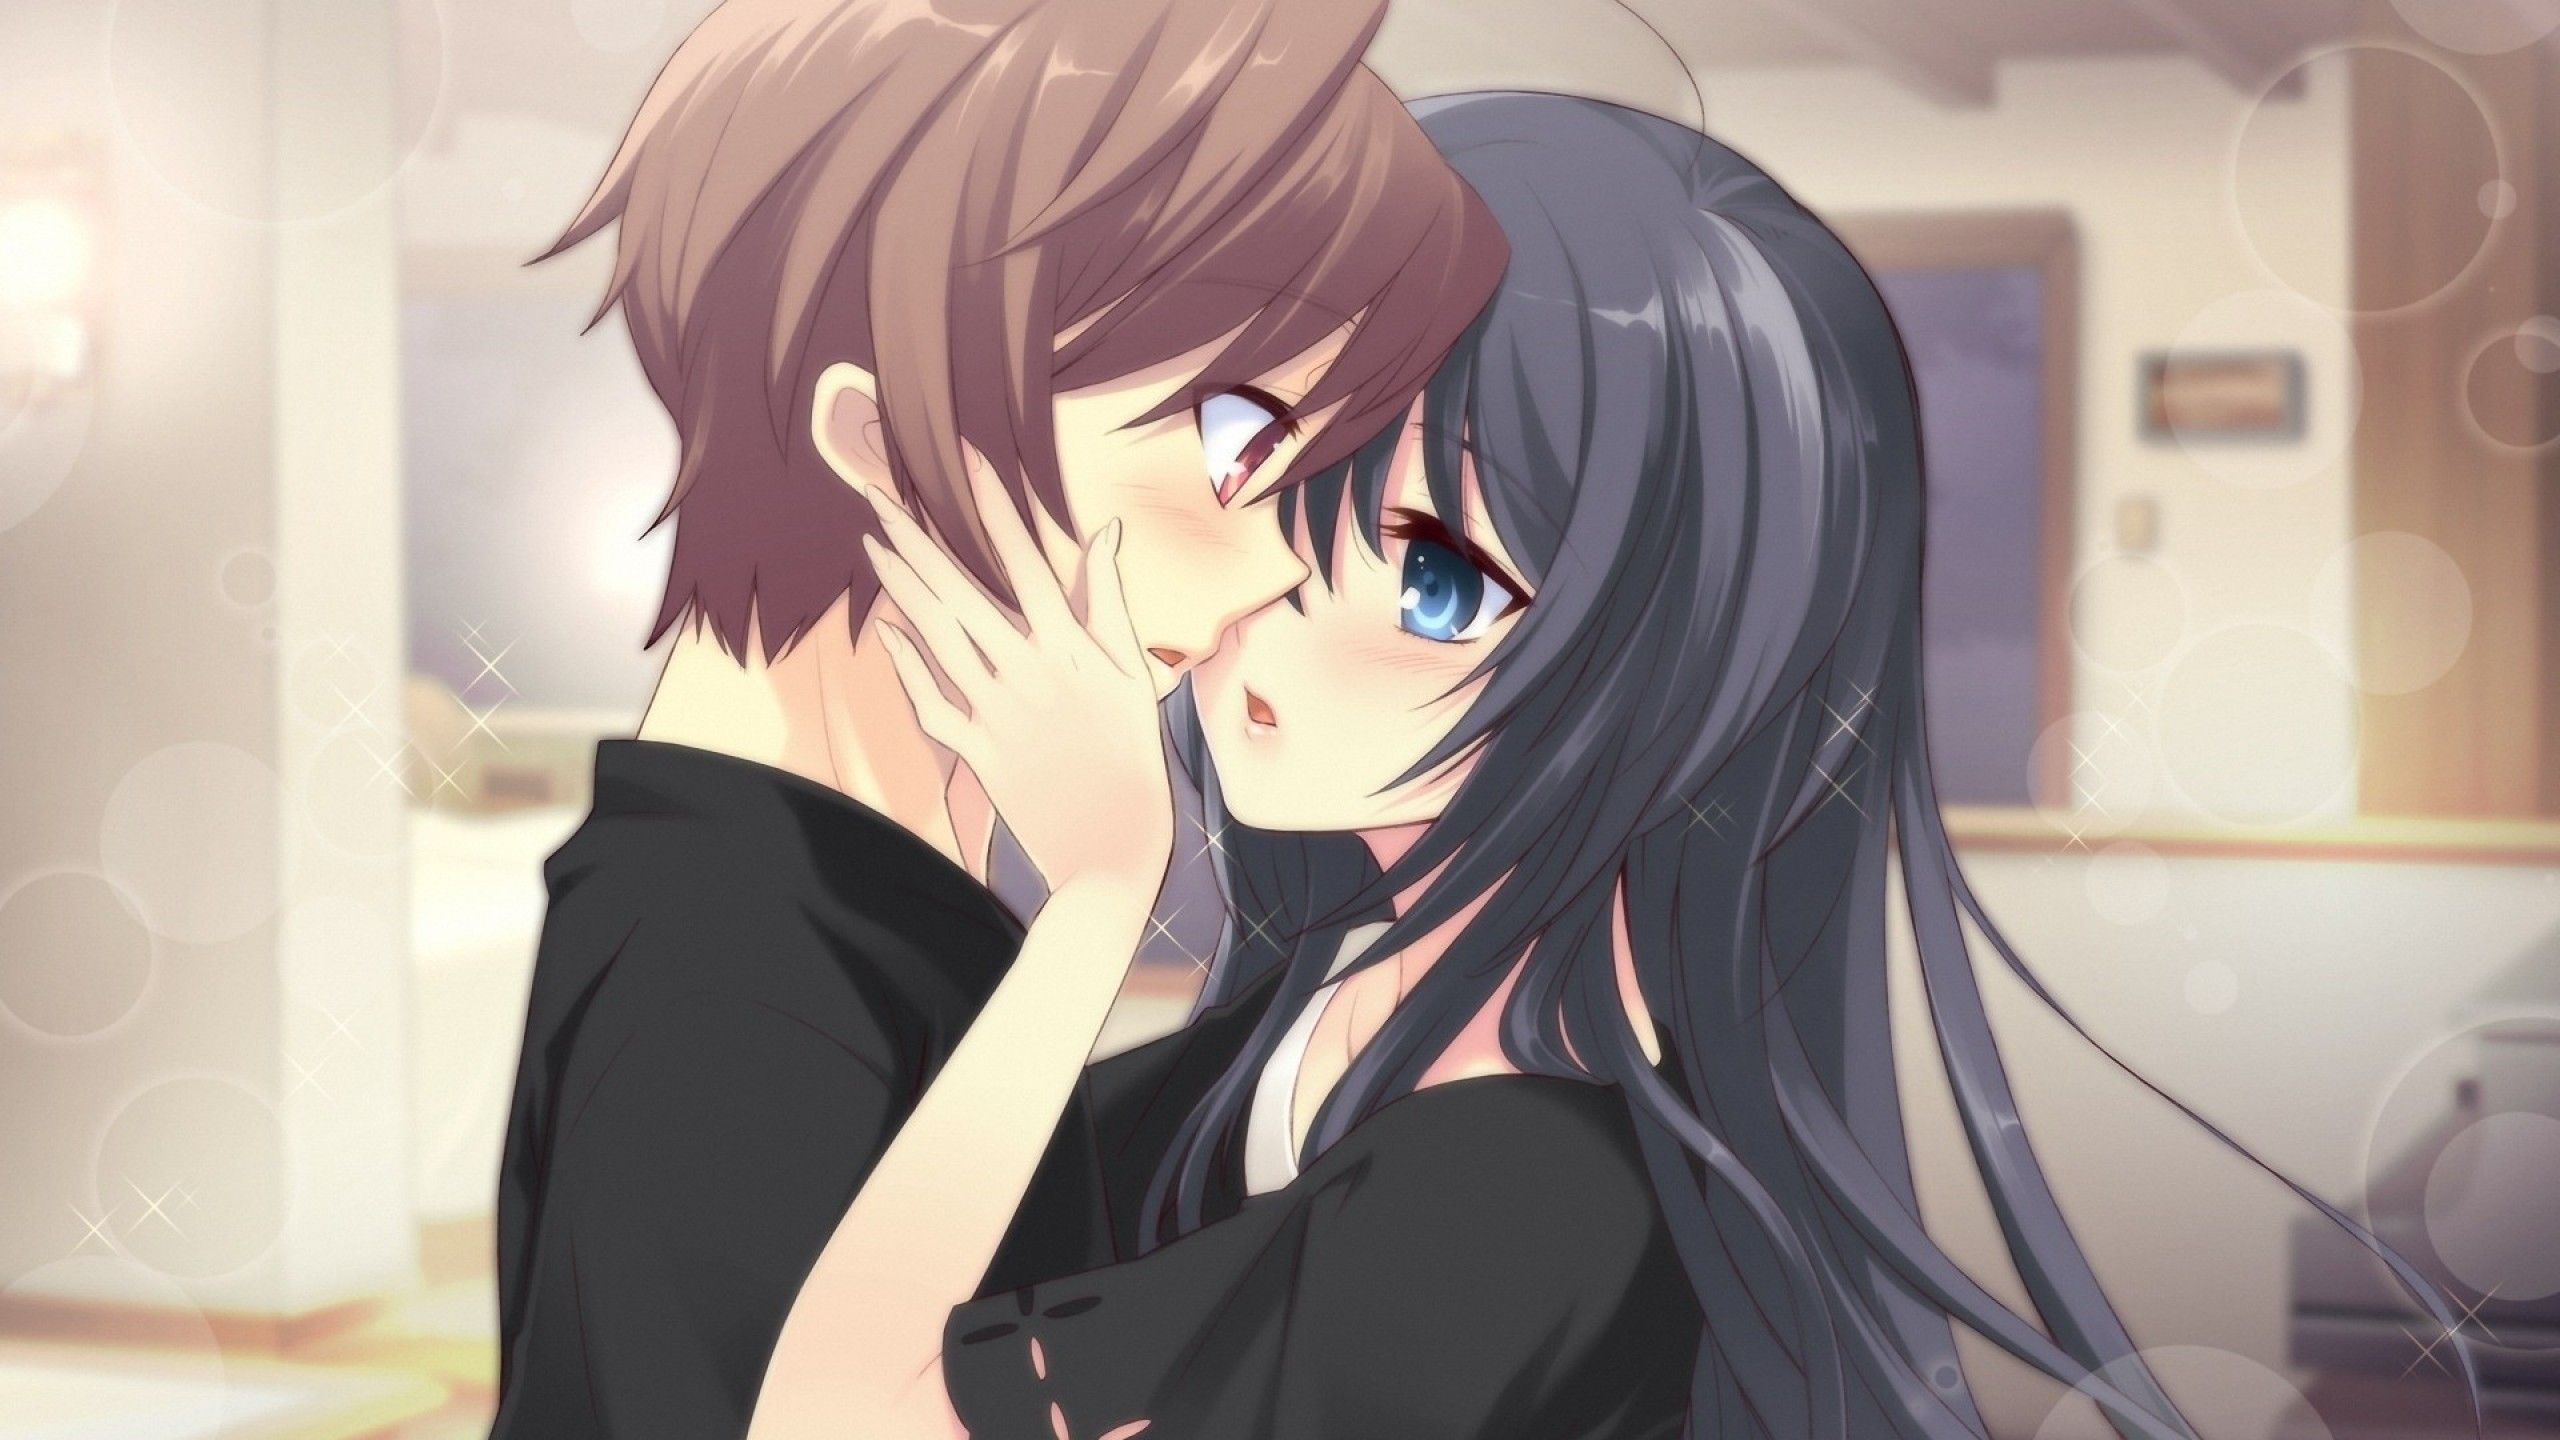 Anime Art Couple Boy Guy Girl Love Cute Kawaii Description Cute Couples Kissing